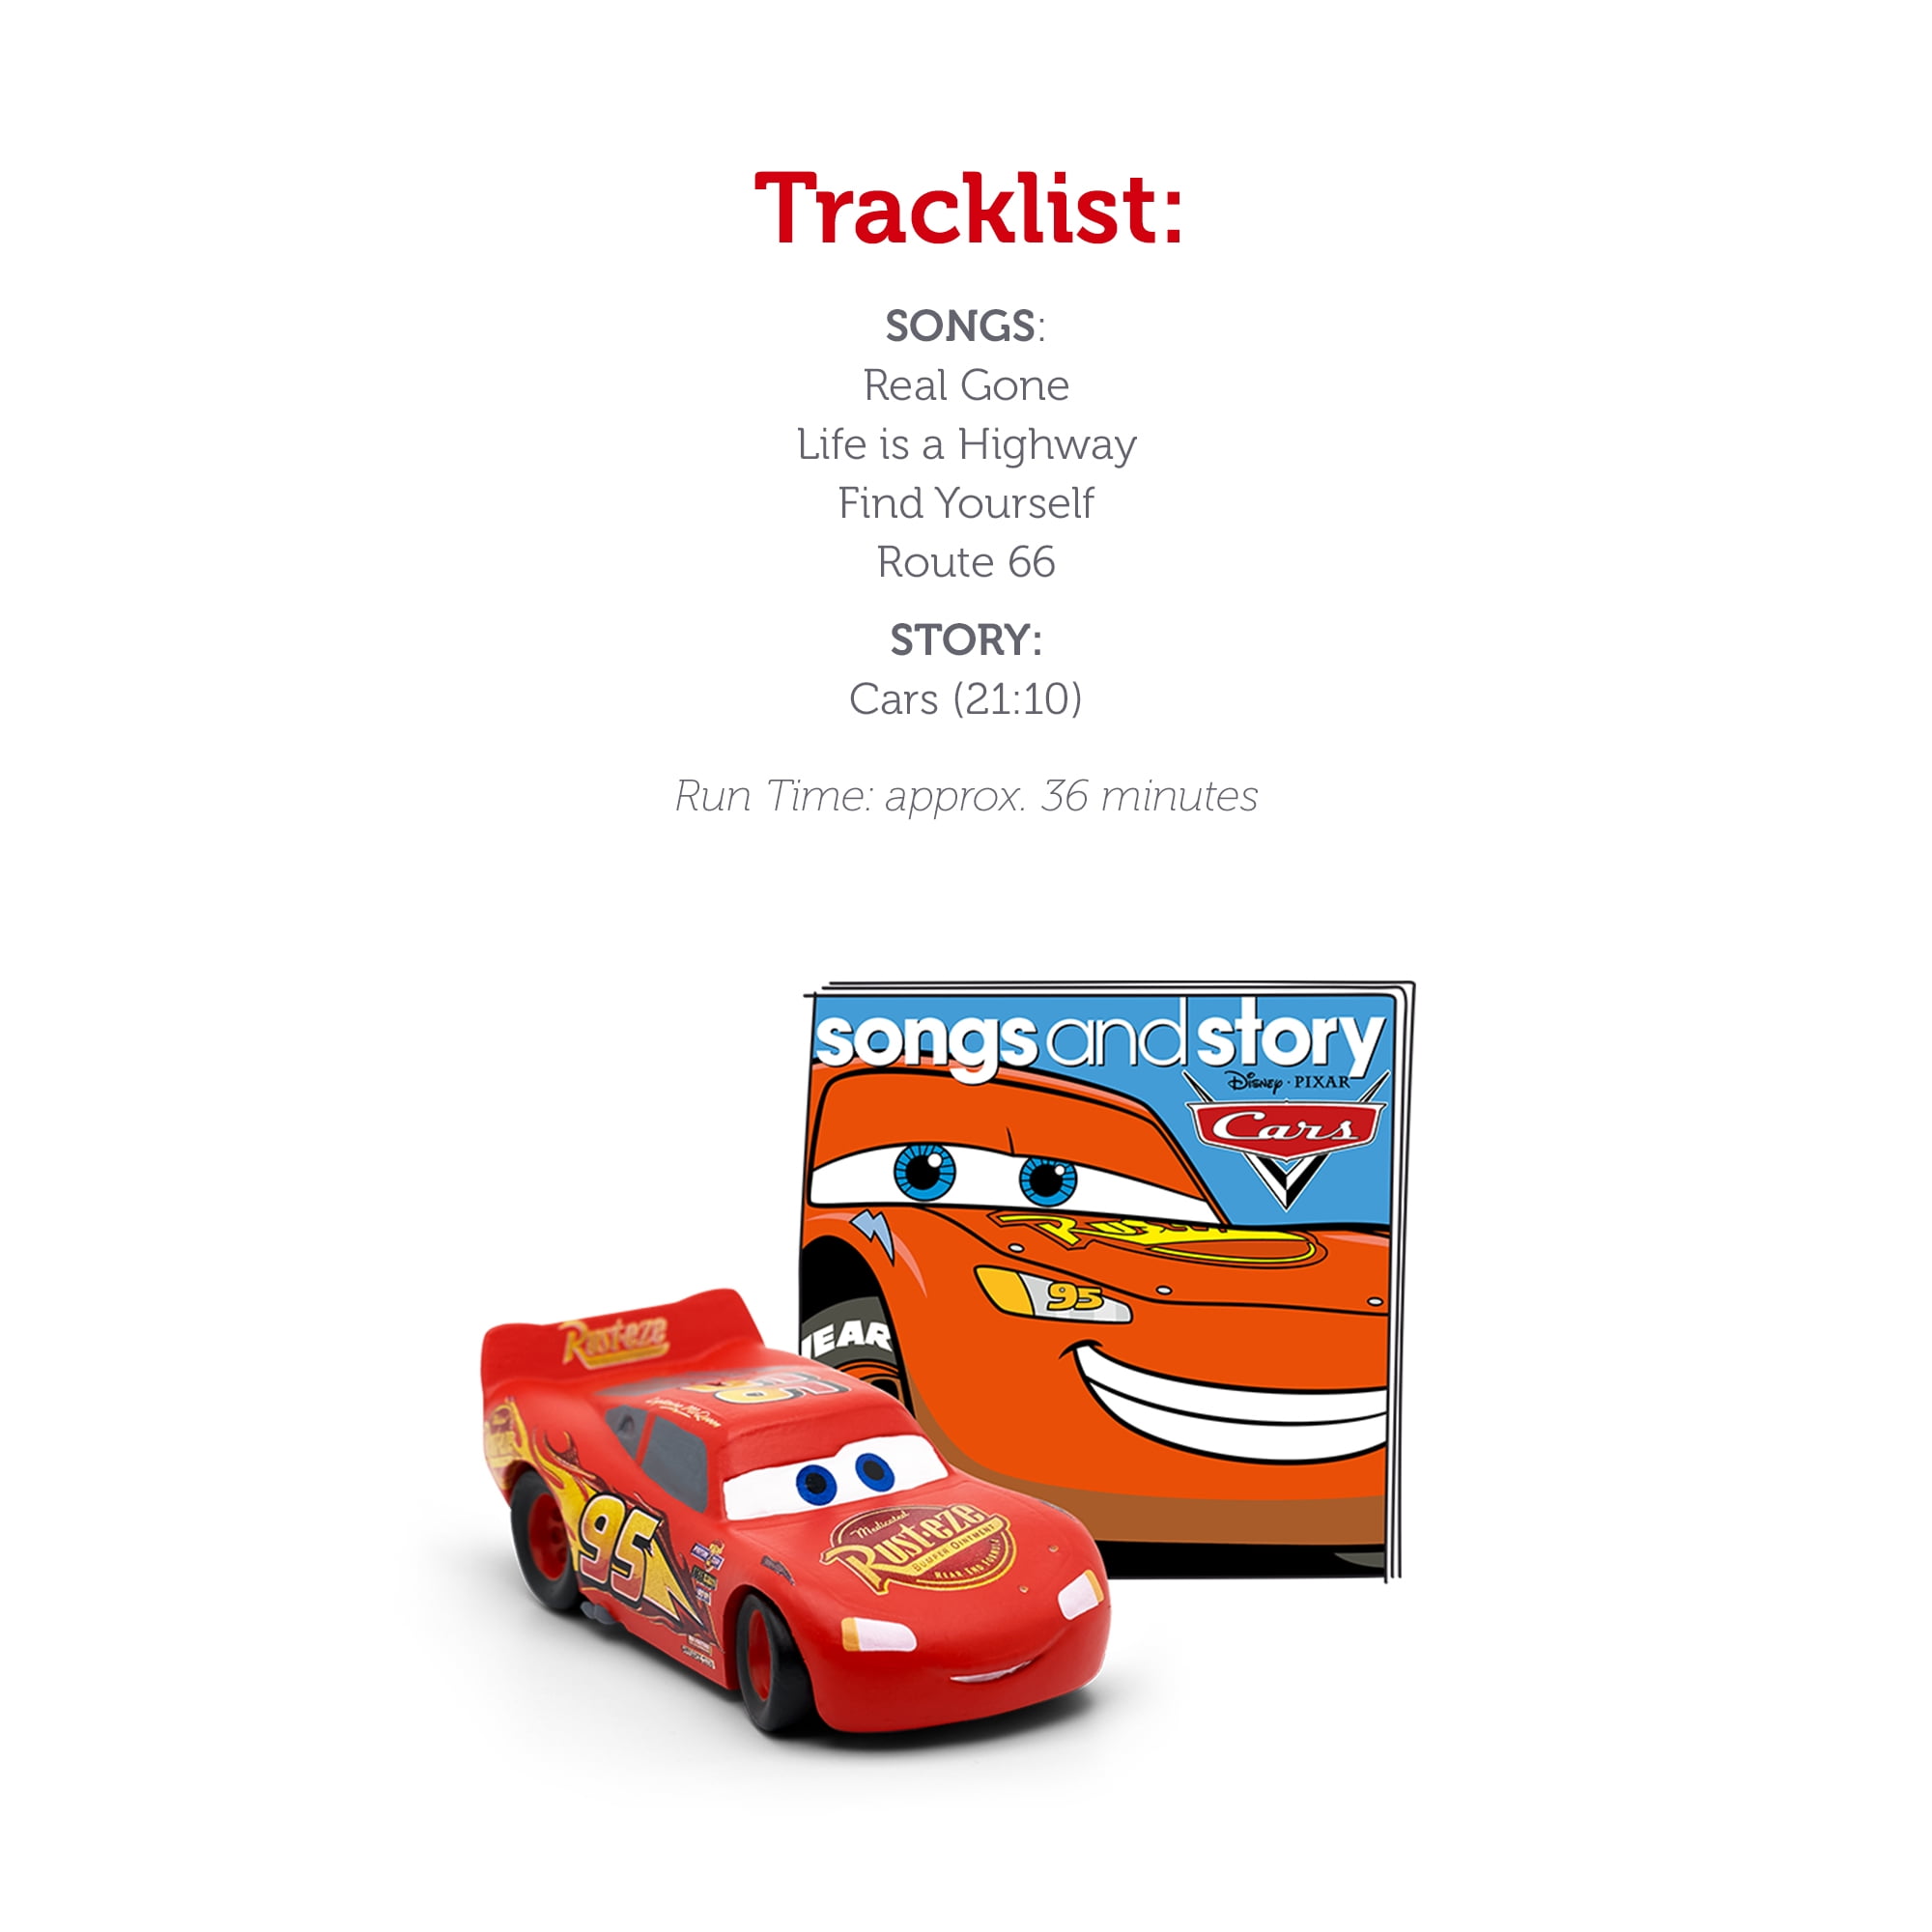 Tonies Lightning McQueen Audio Play Figurine from Disney and Pixar's Cars 